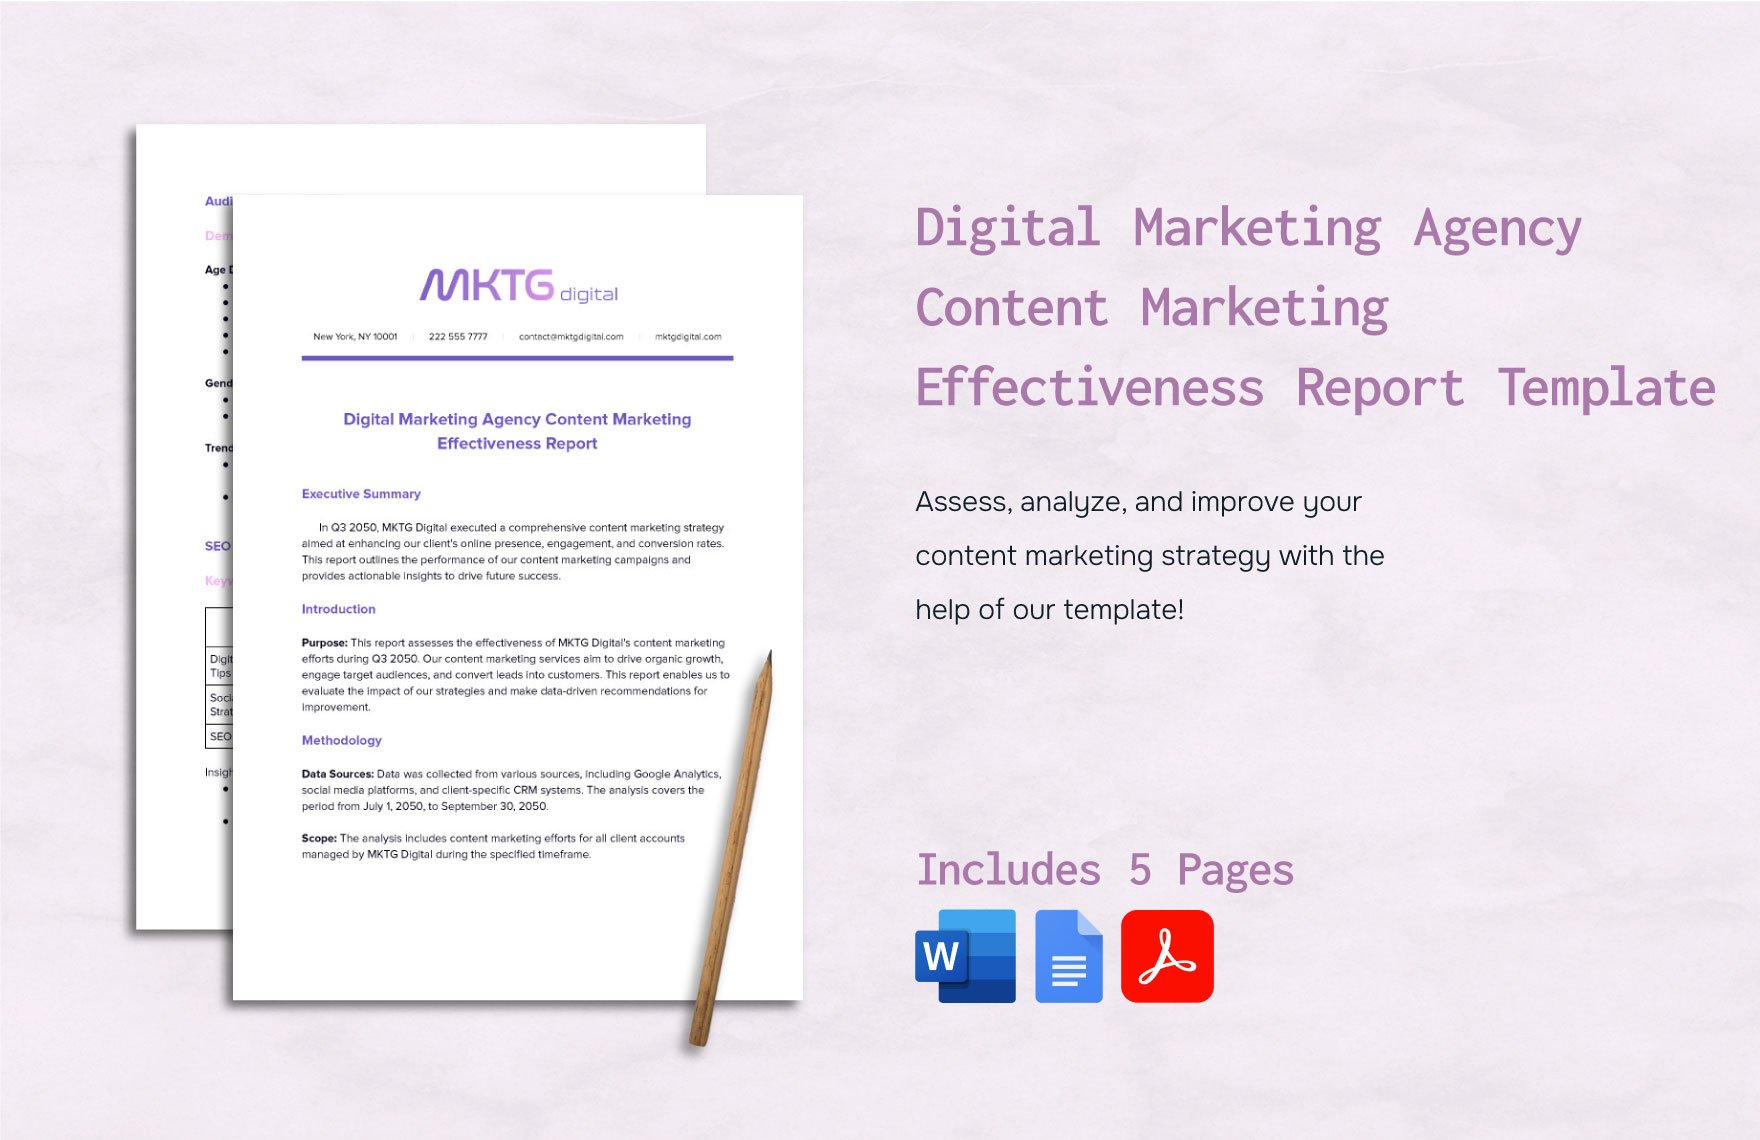 Digital Marketing Agency Content Marketing Effectiveness Report Template